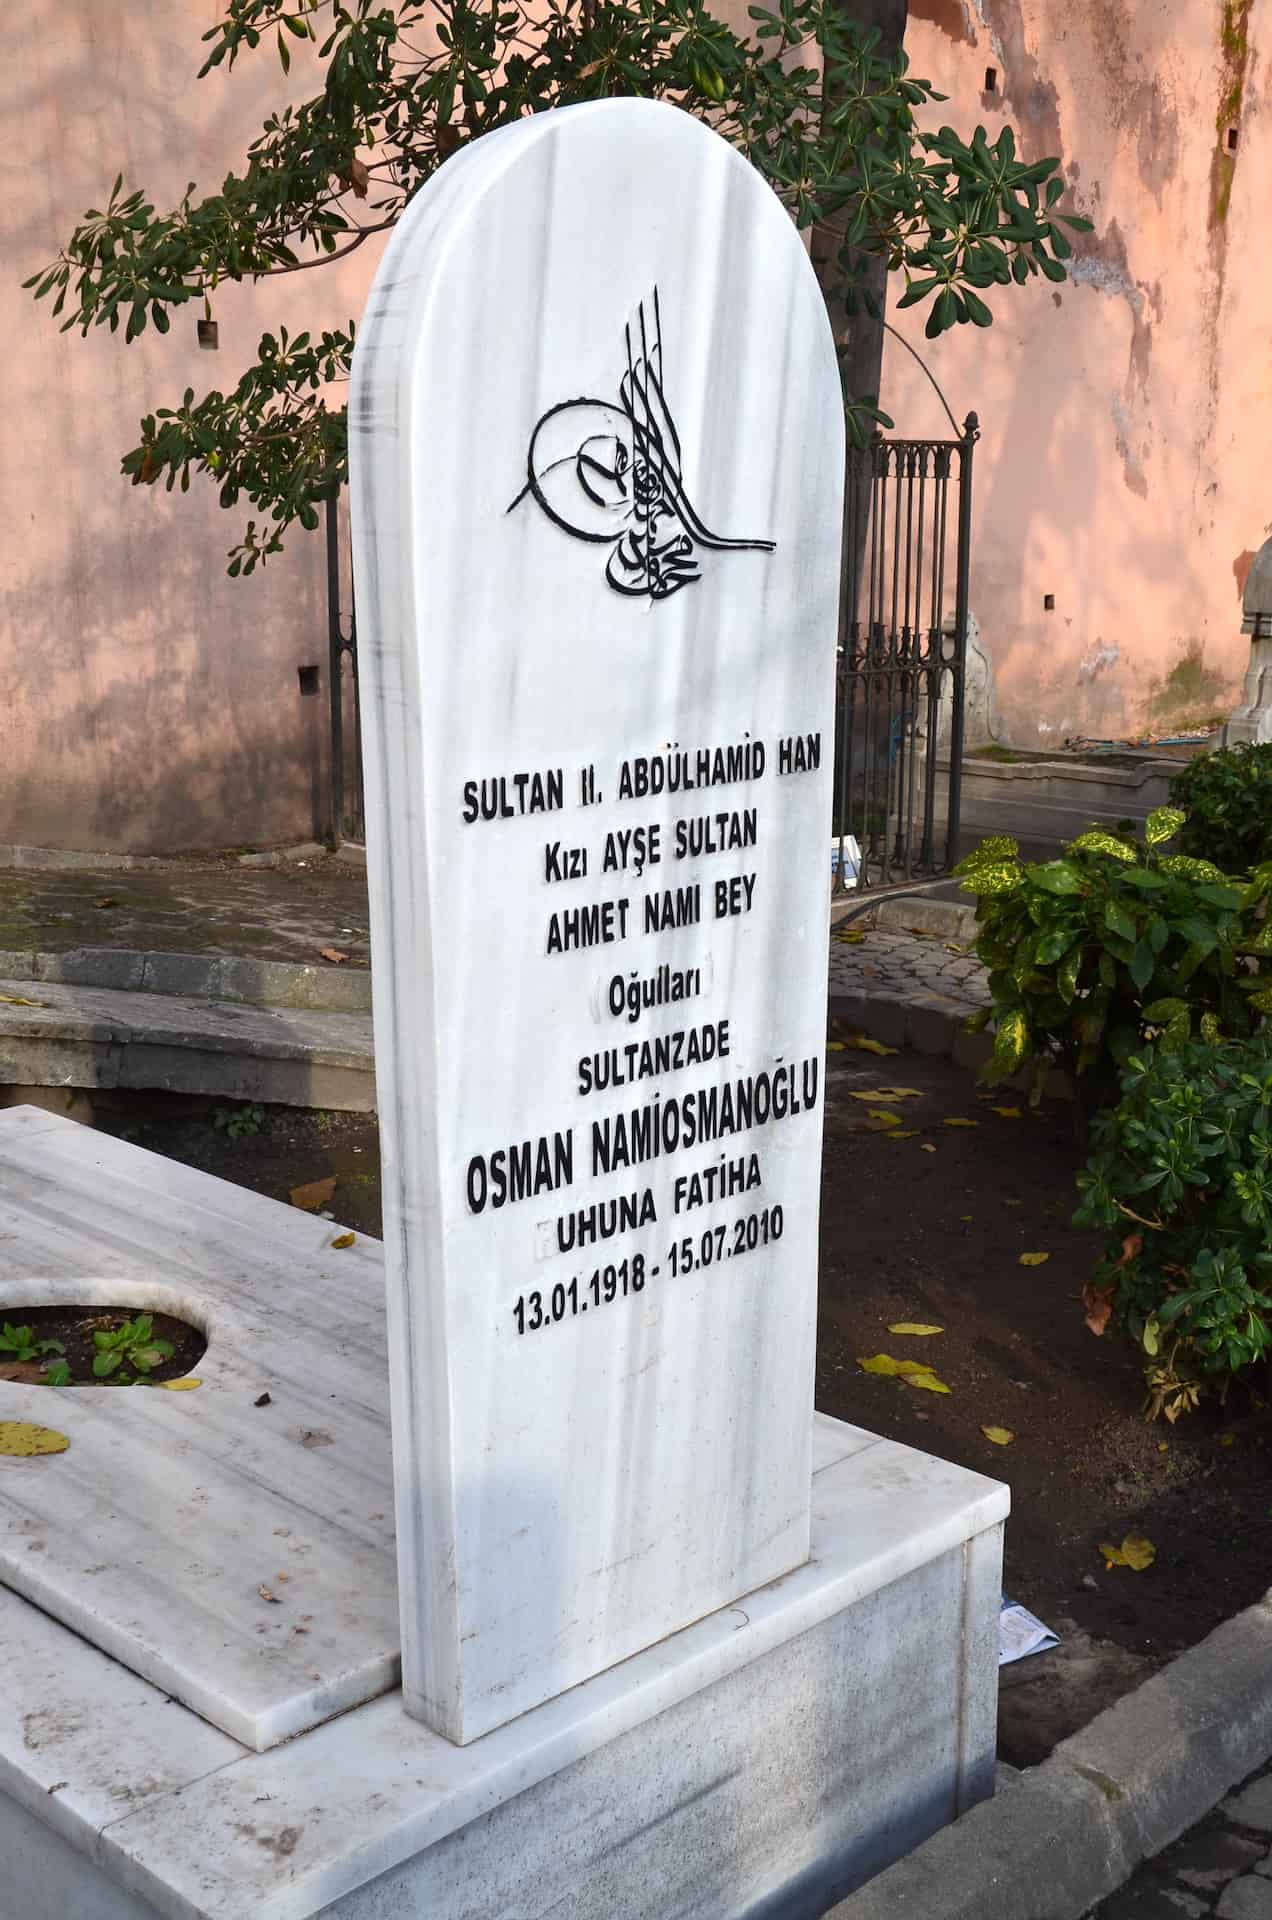 Grave of Osman Nami Osmanoğlu